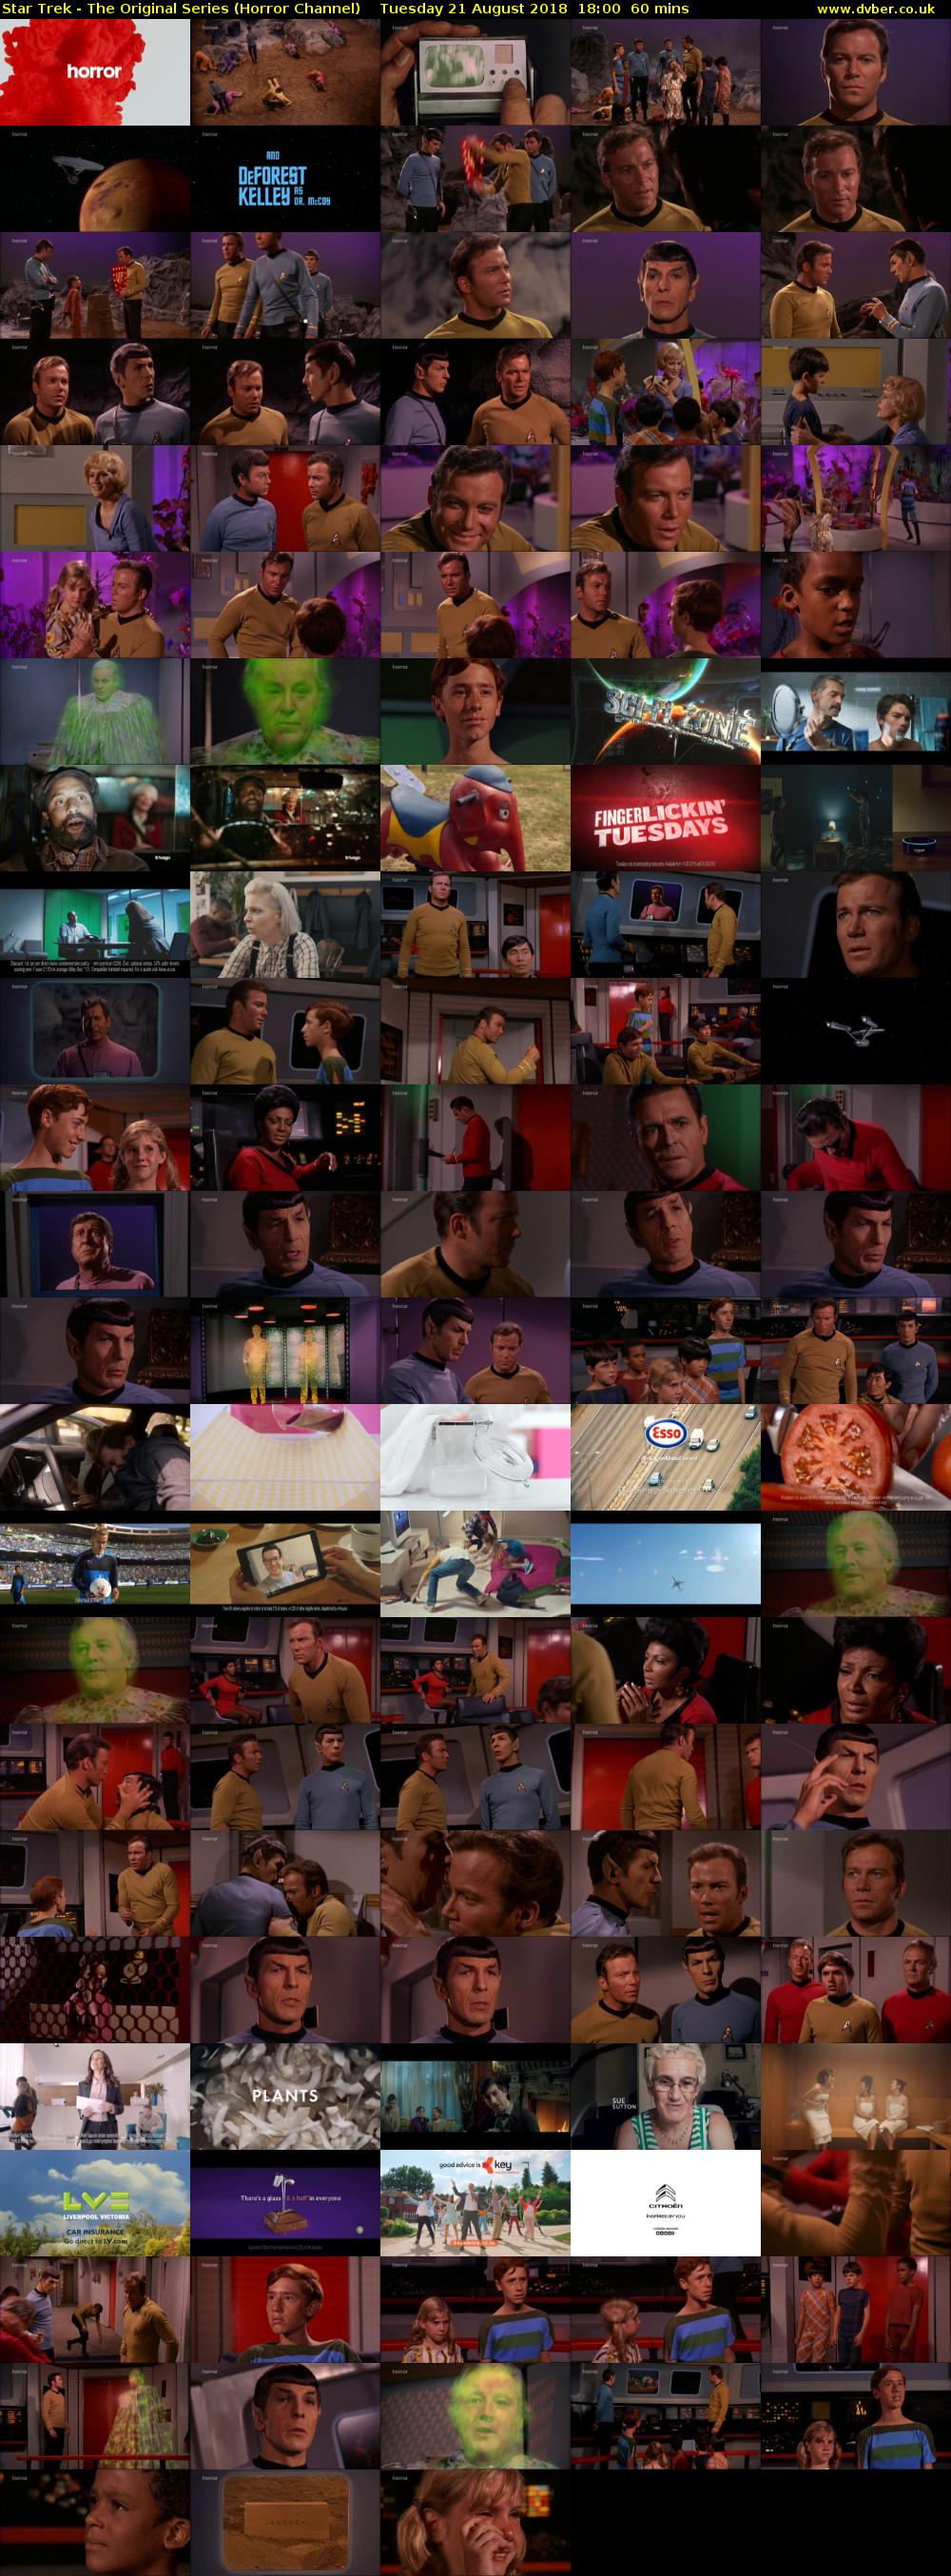 Star Trek - The Original Series (Horror Channel) Tuesday 21 August 2018 18:00 - 19:00